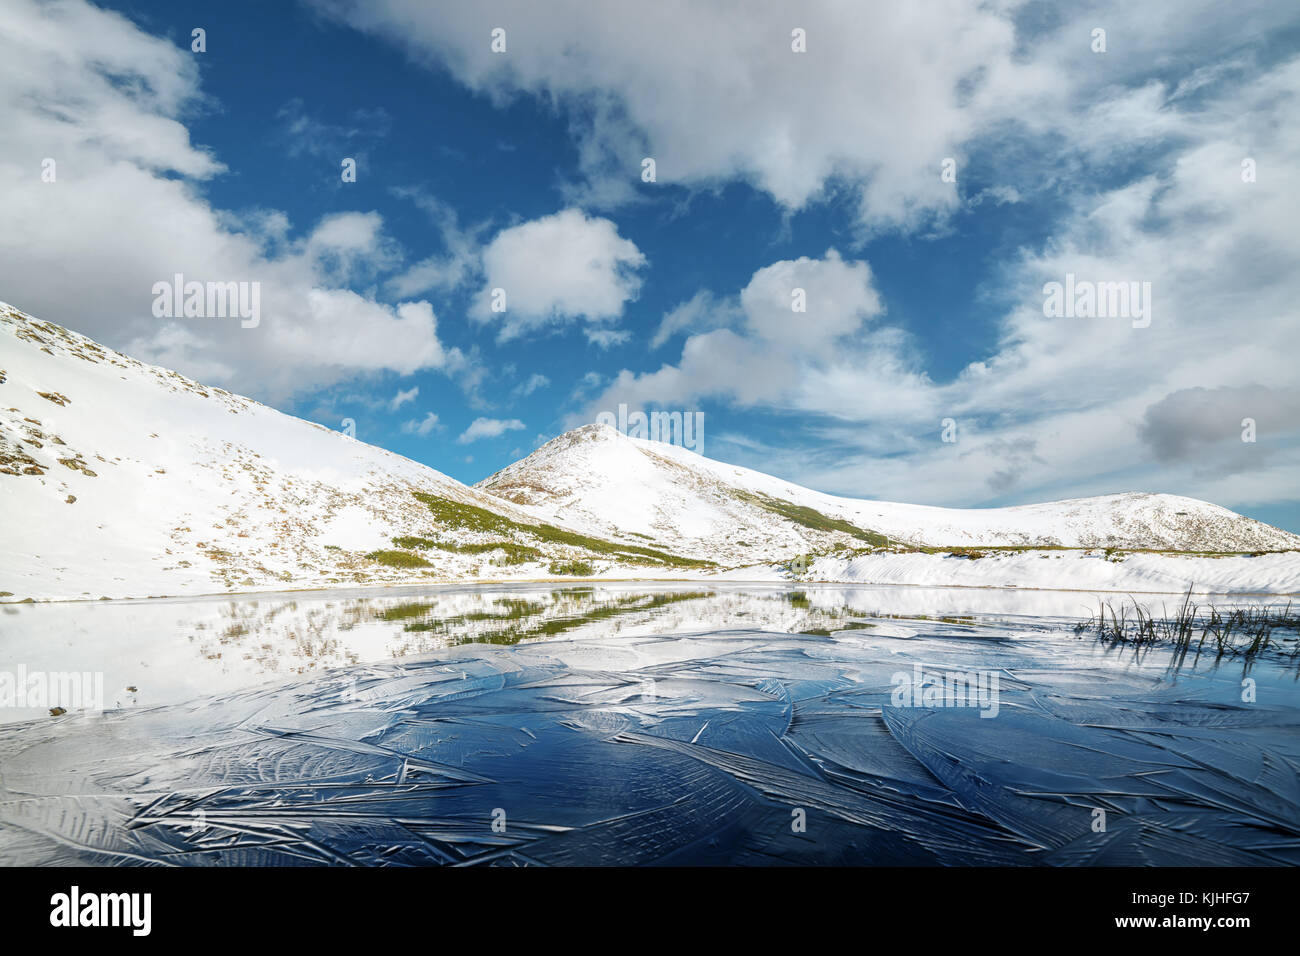 Frozen mountain lake with blue ice Stock Photo